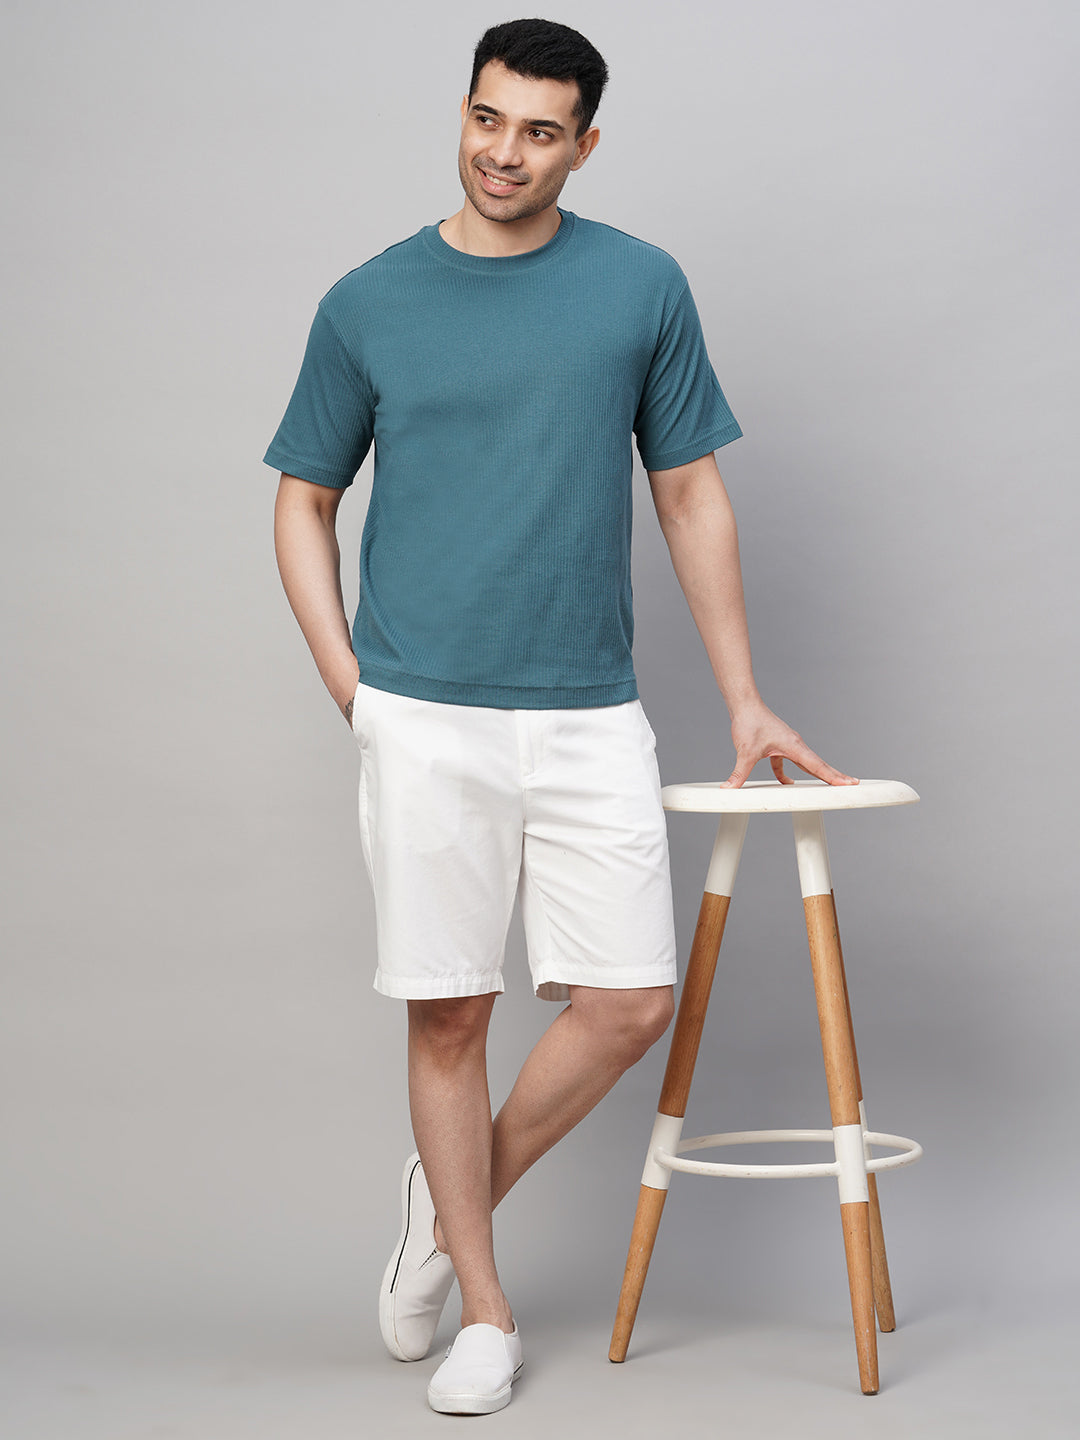 Men's Blue Cotton Elastane Regular Fit Tshirt